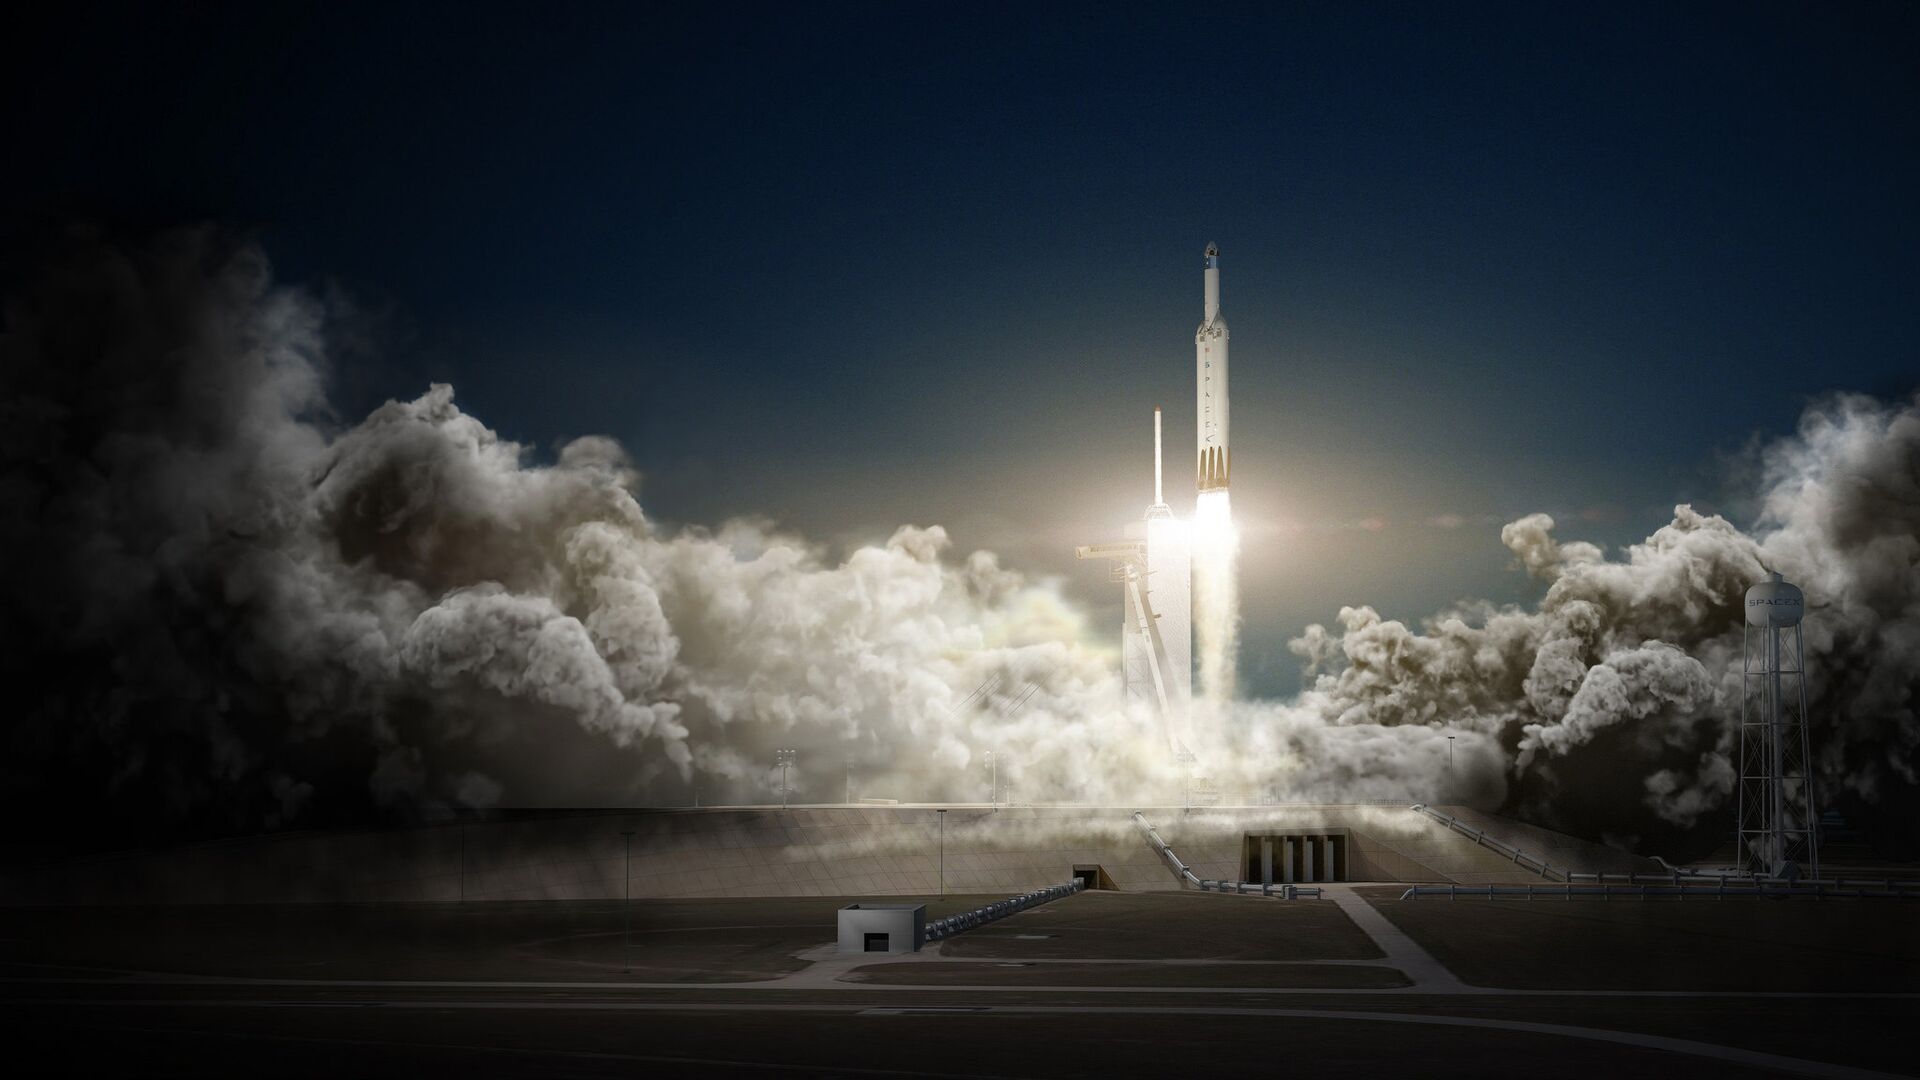 Иллюстрация старта ракеты Falcon Heavy компании SpaceX - ИноСМИ, 1920, 28.02.2021